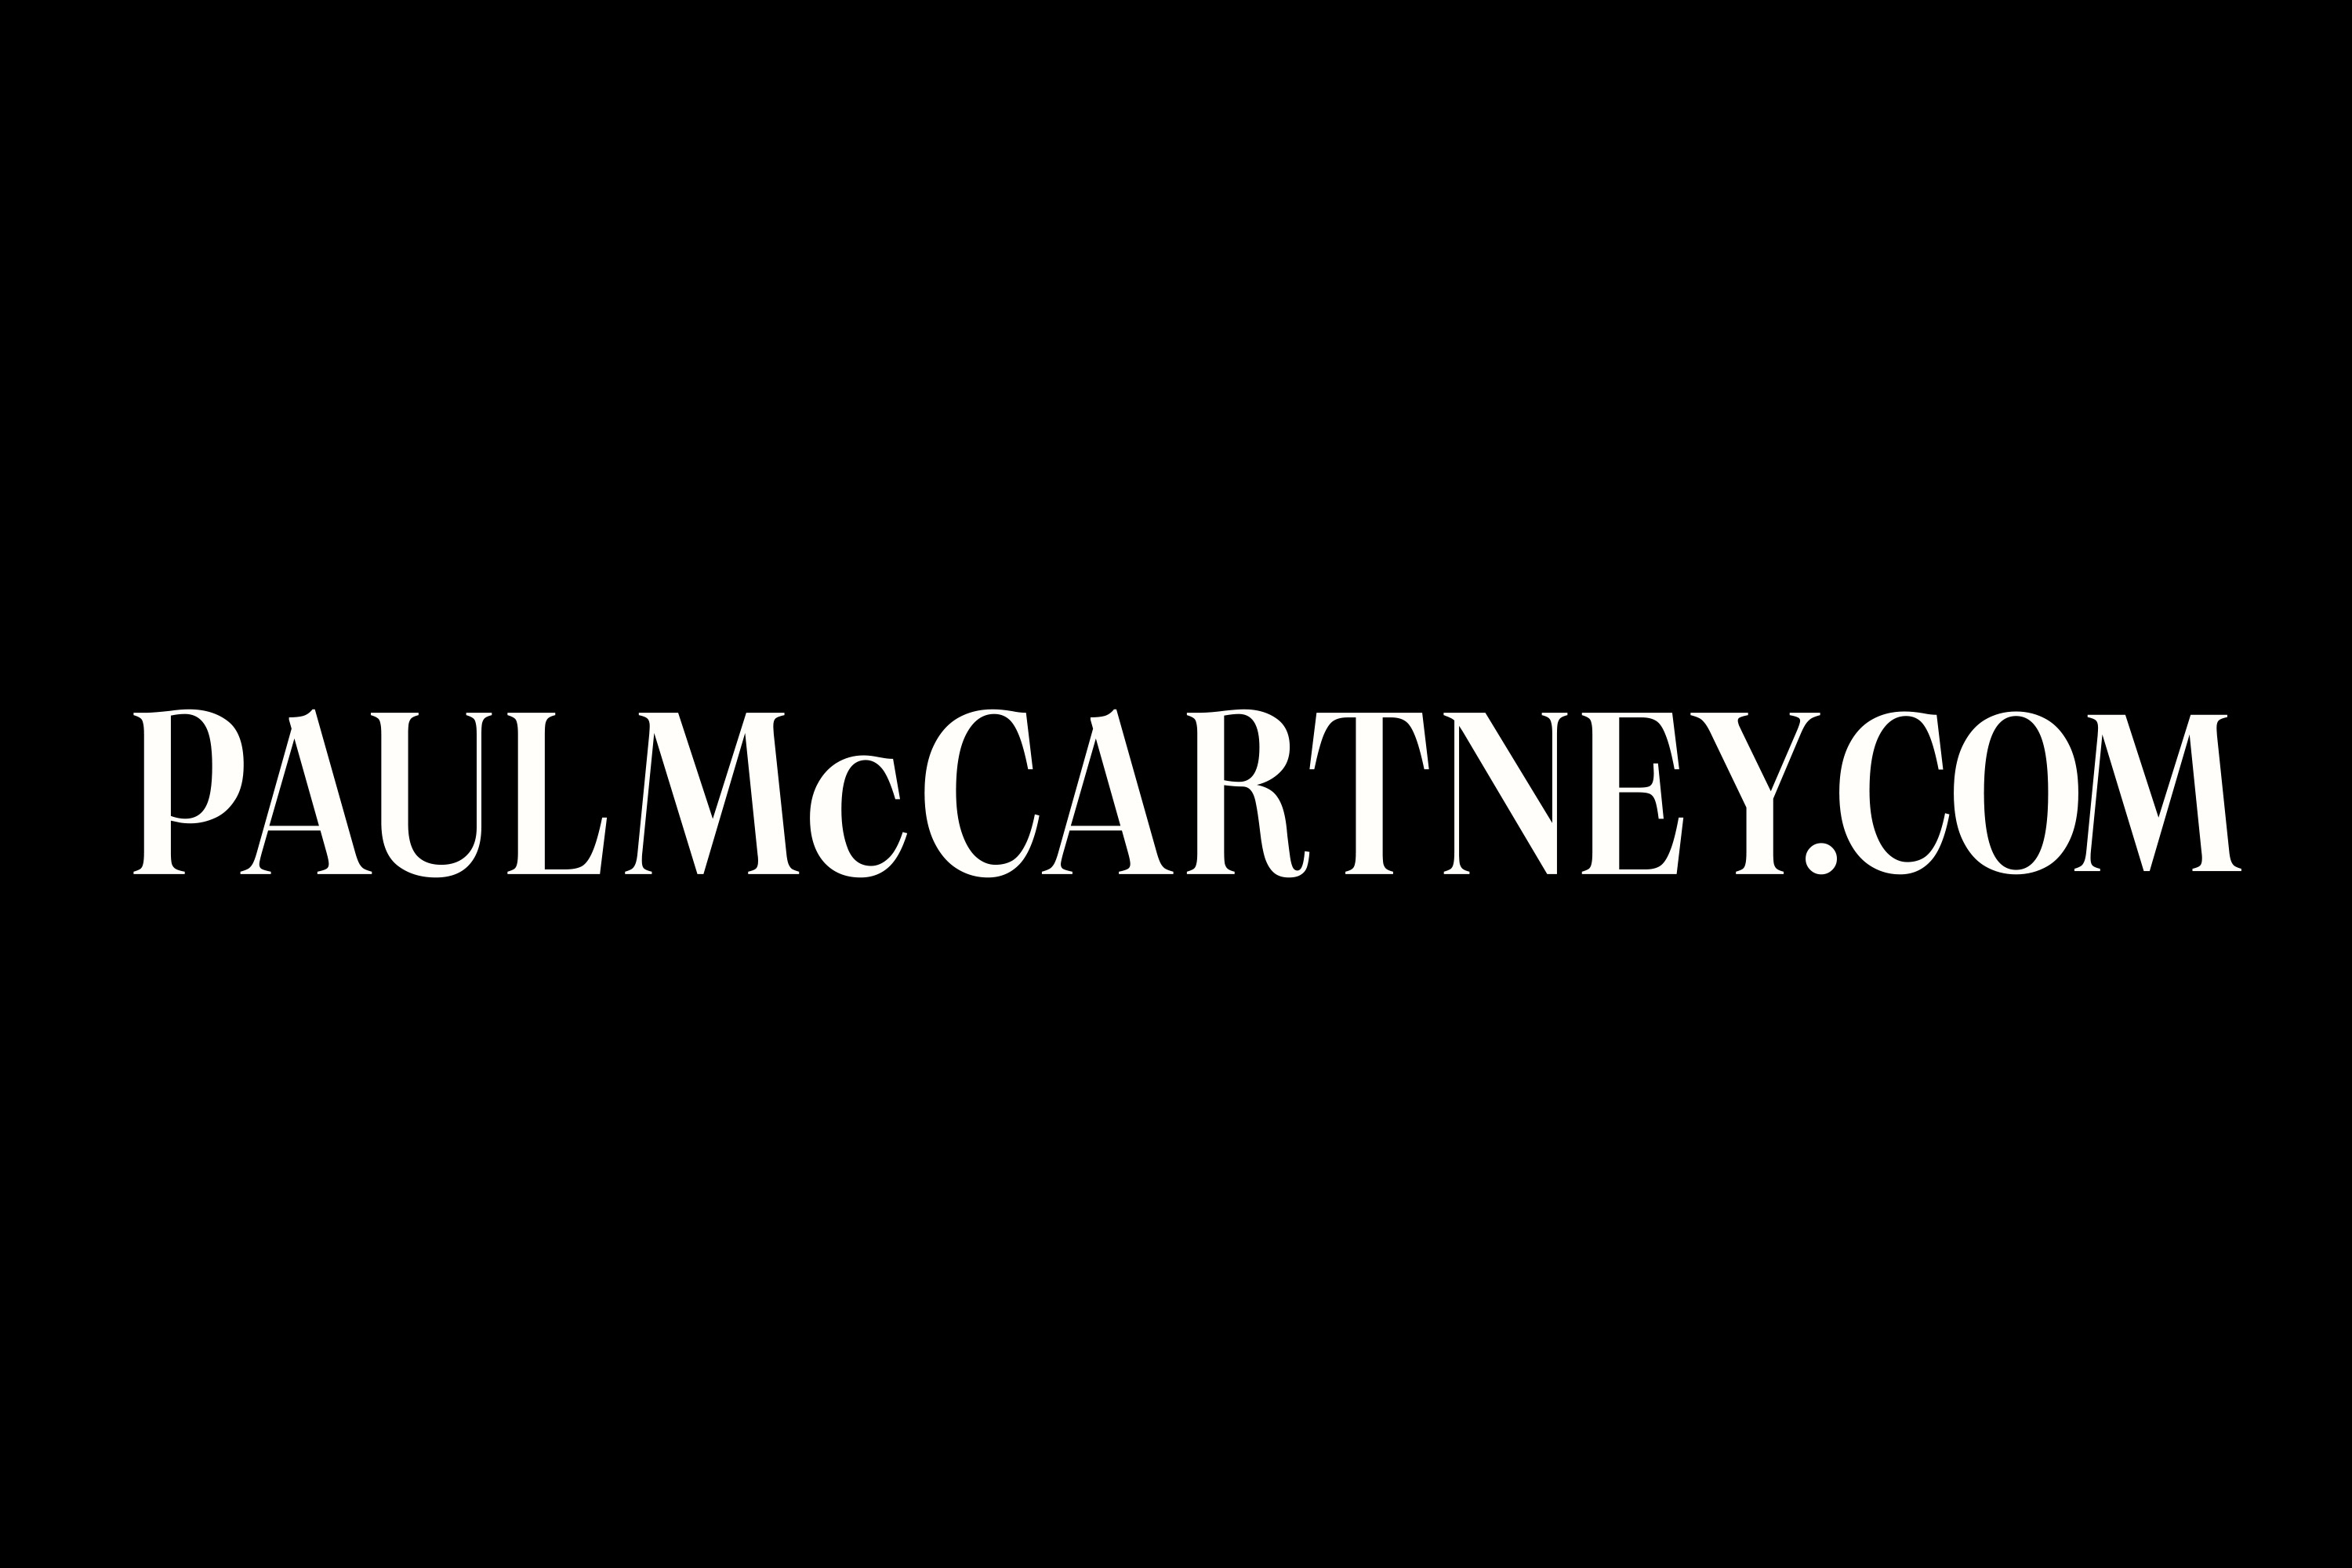 www.paulmccartney.com